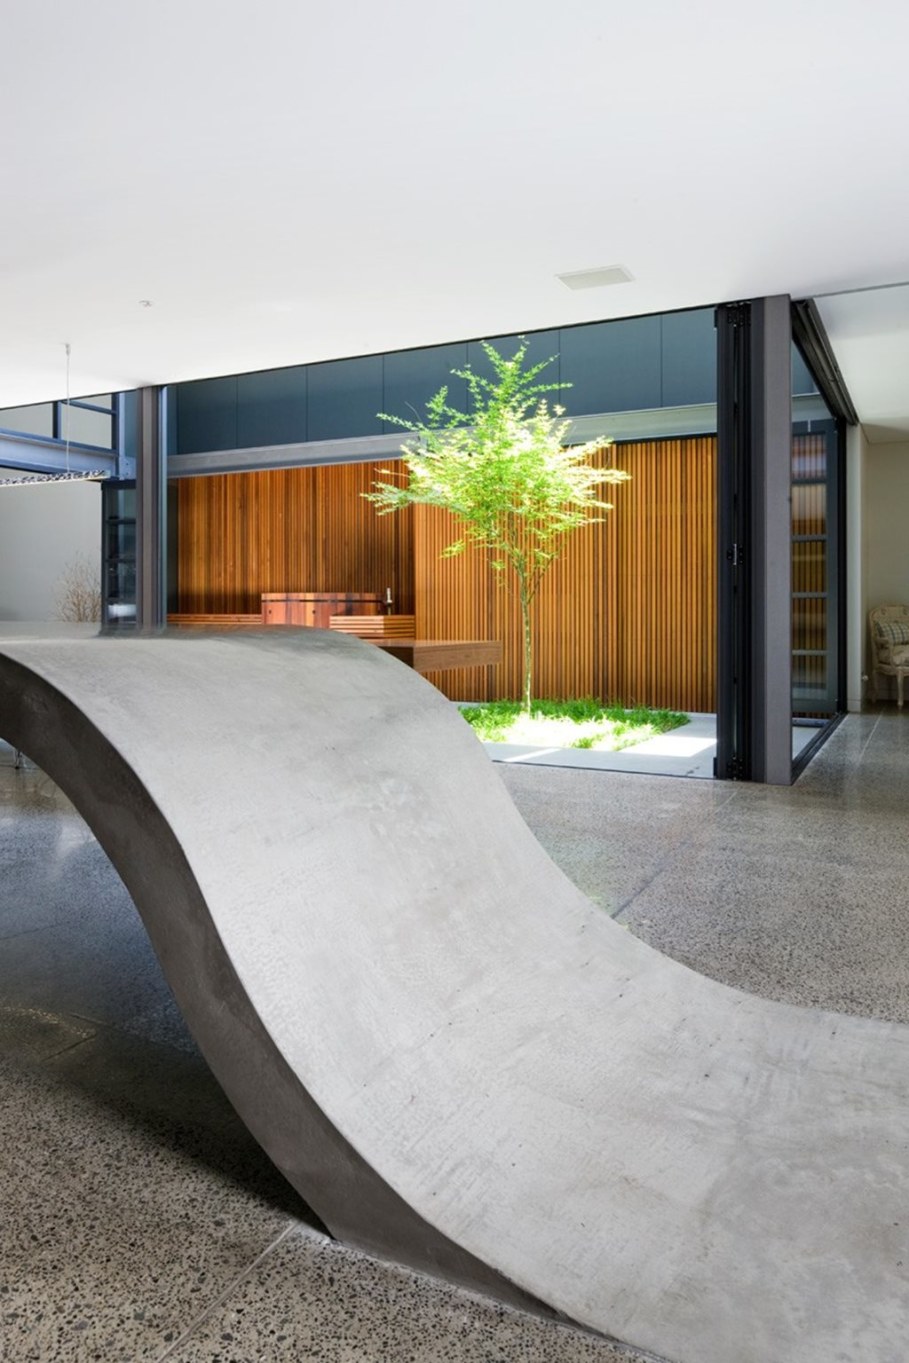 Grand loft house in Australia by Corben Architects studio - Kitchen 5